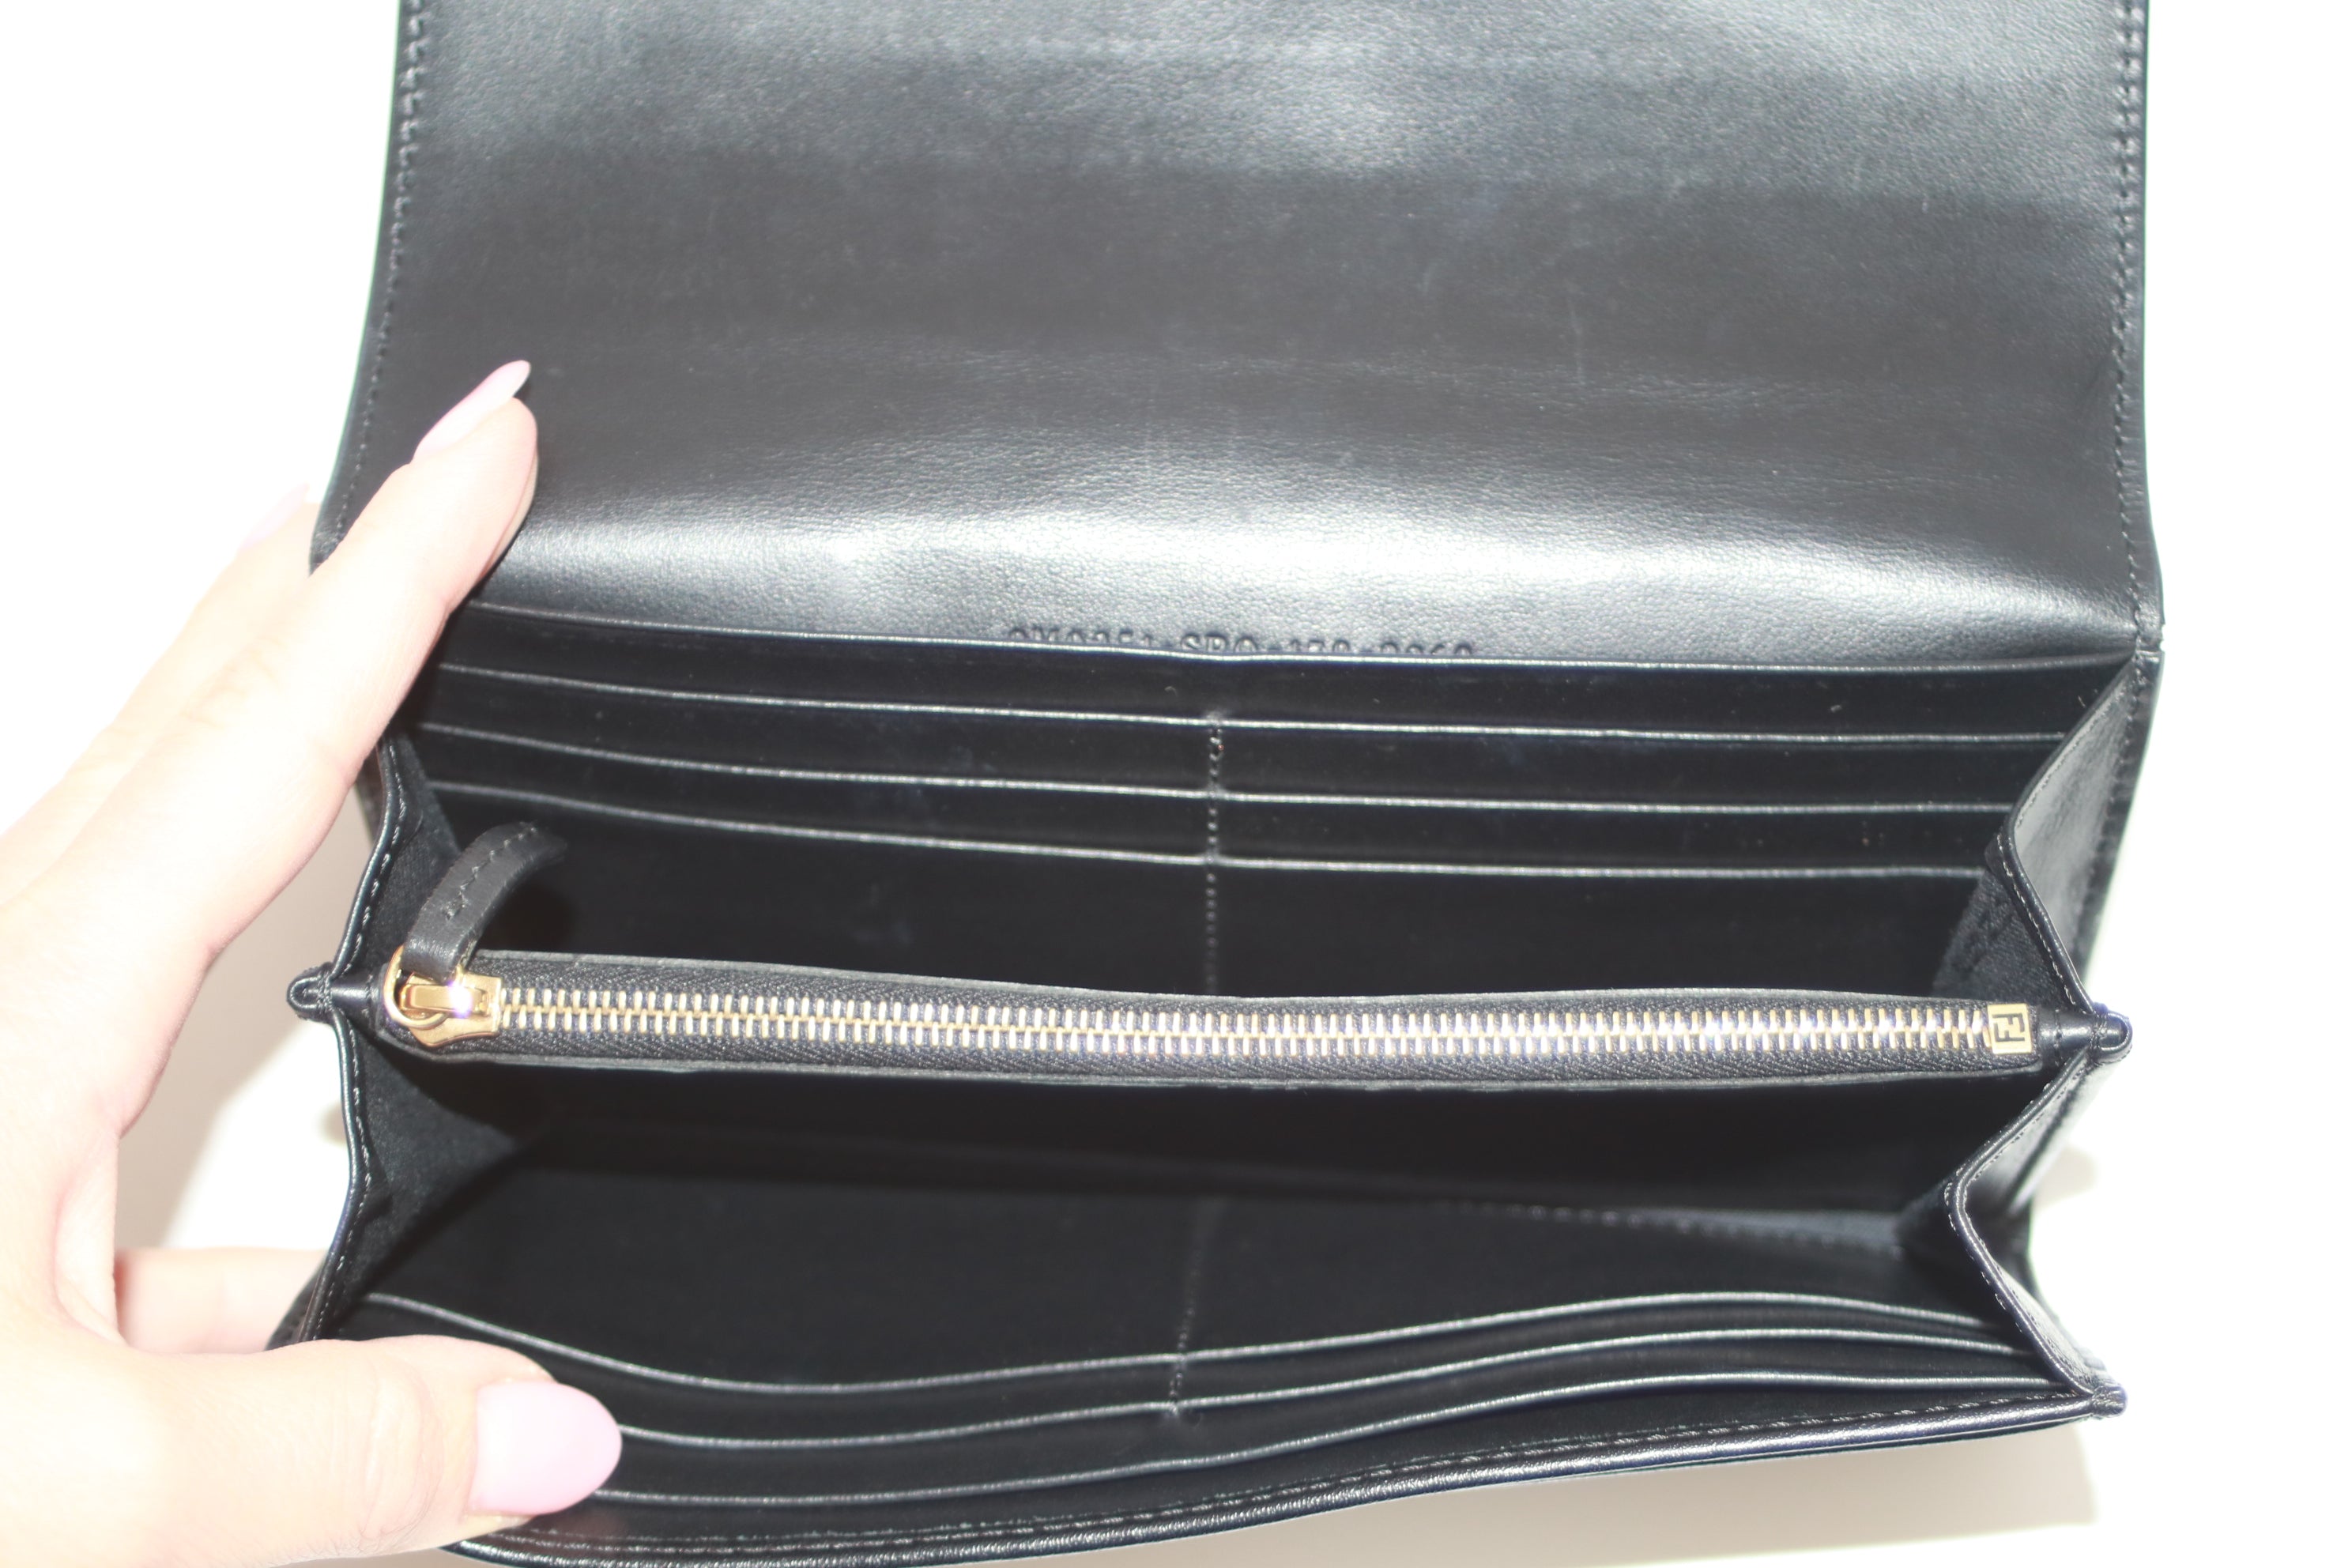 Fendi Long Leather Wallet Black Used (7708)